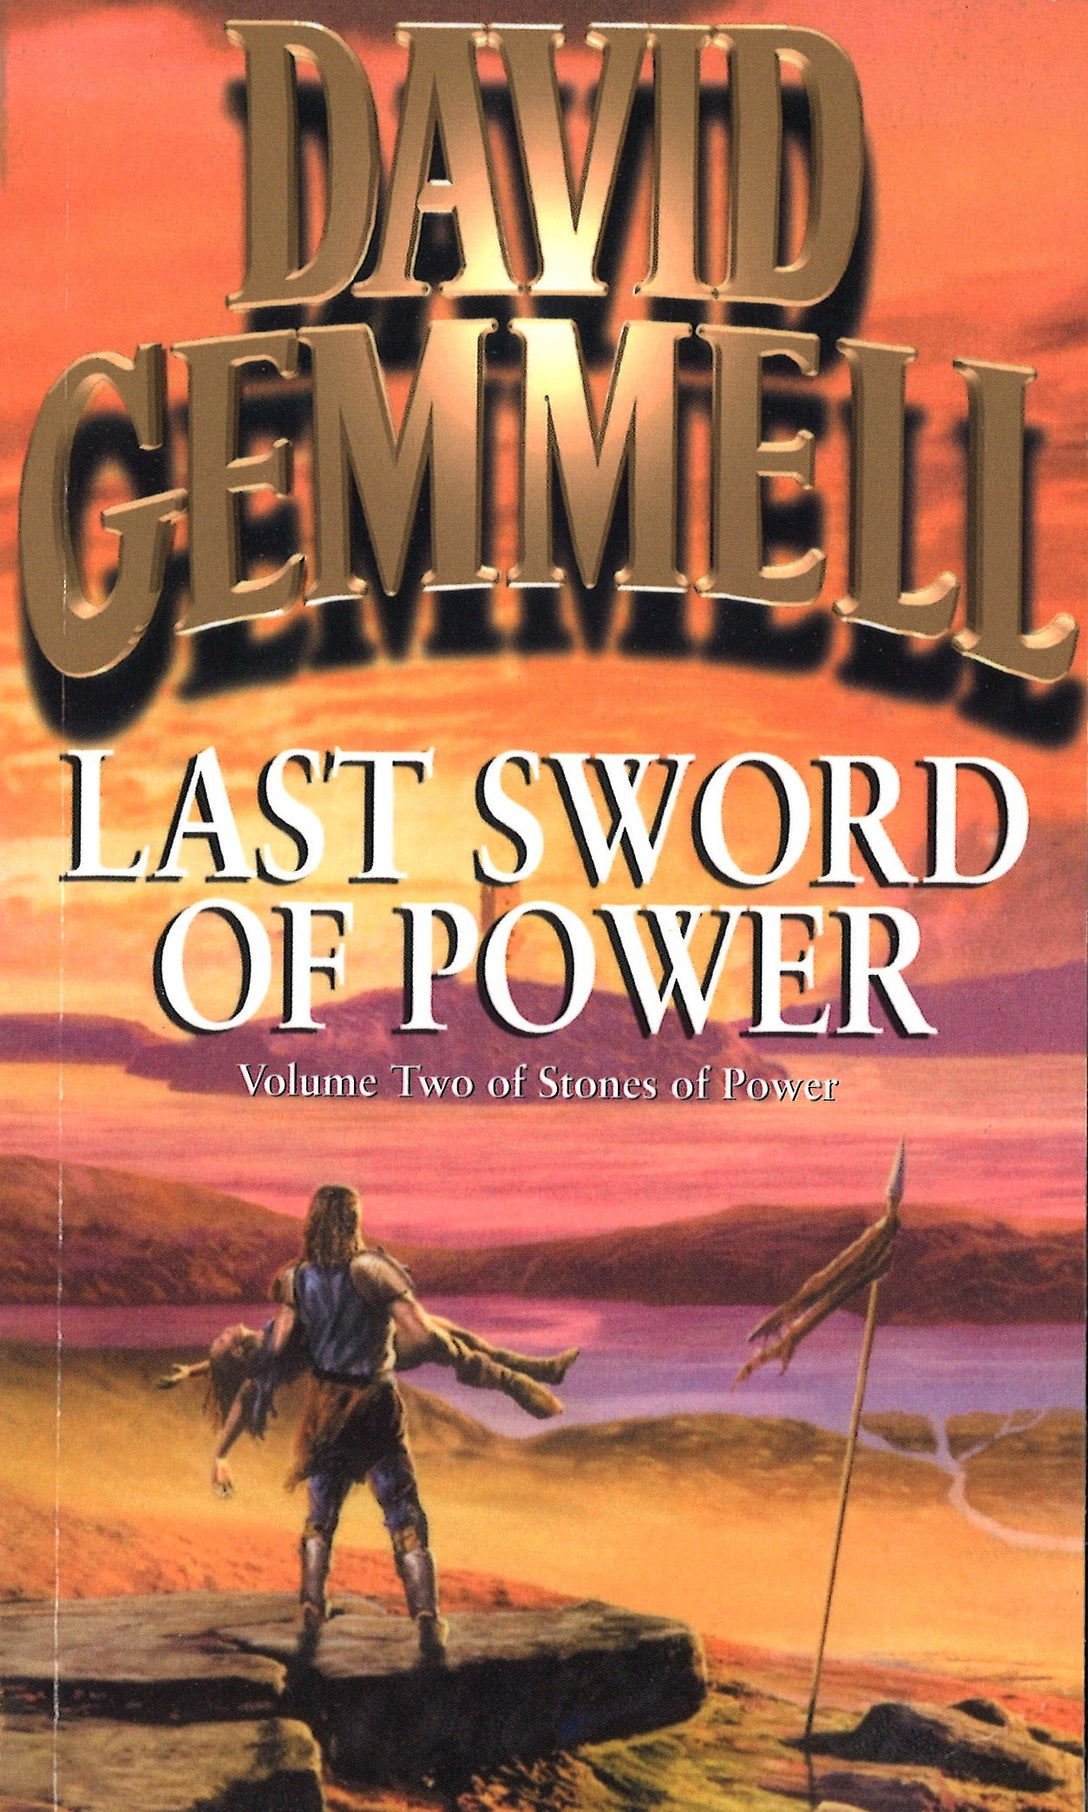 Last Sword Of Power by David Gemmell